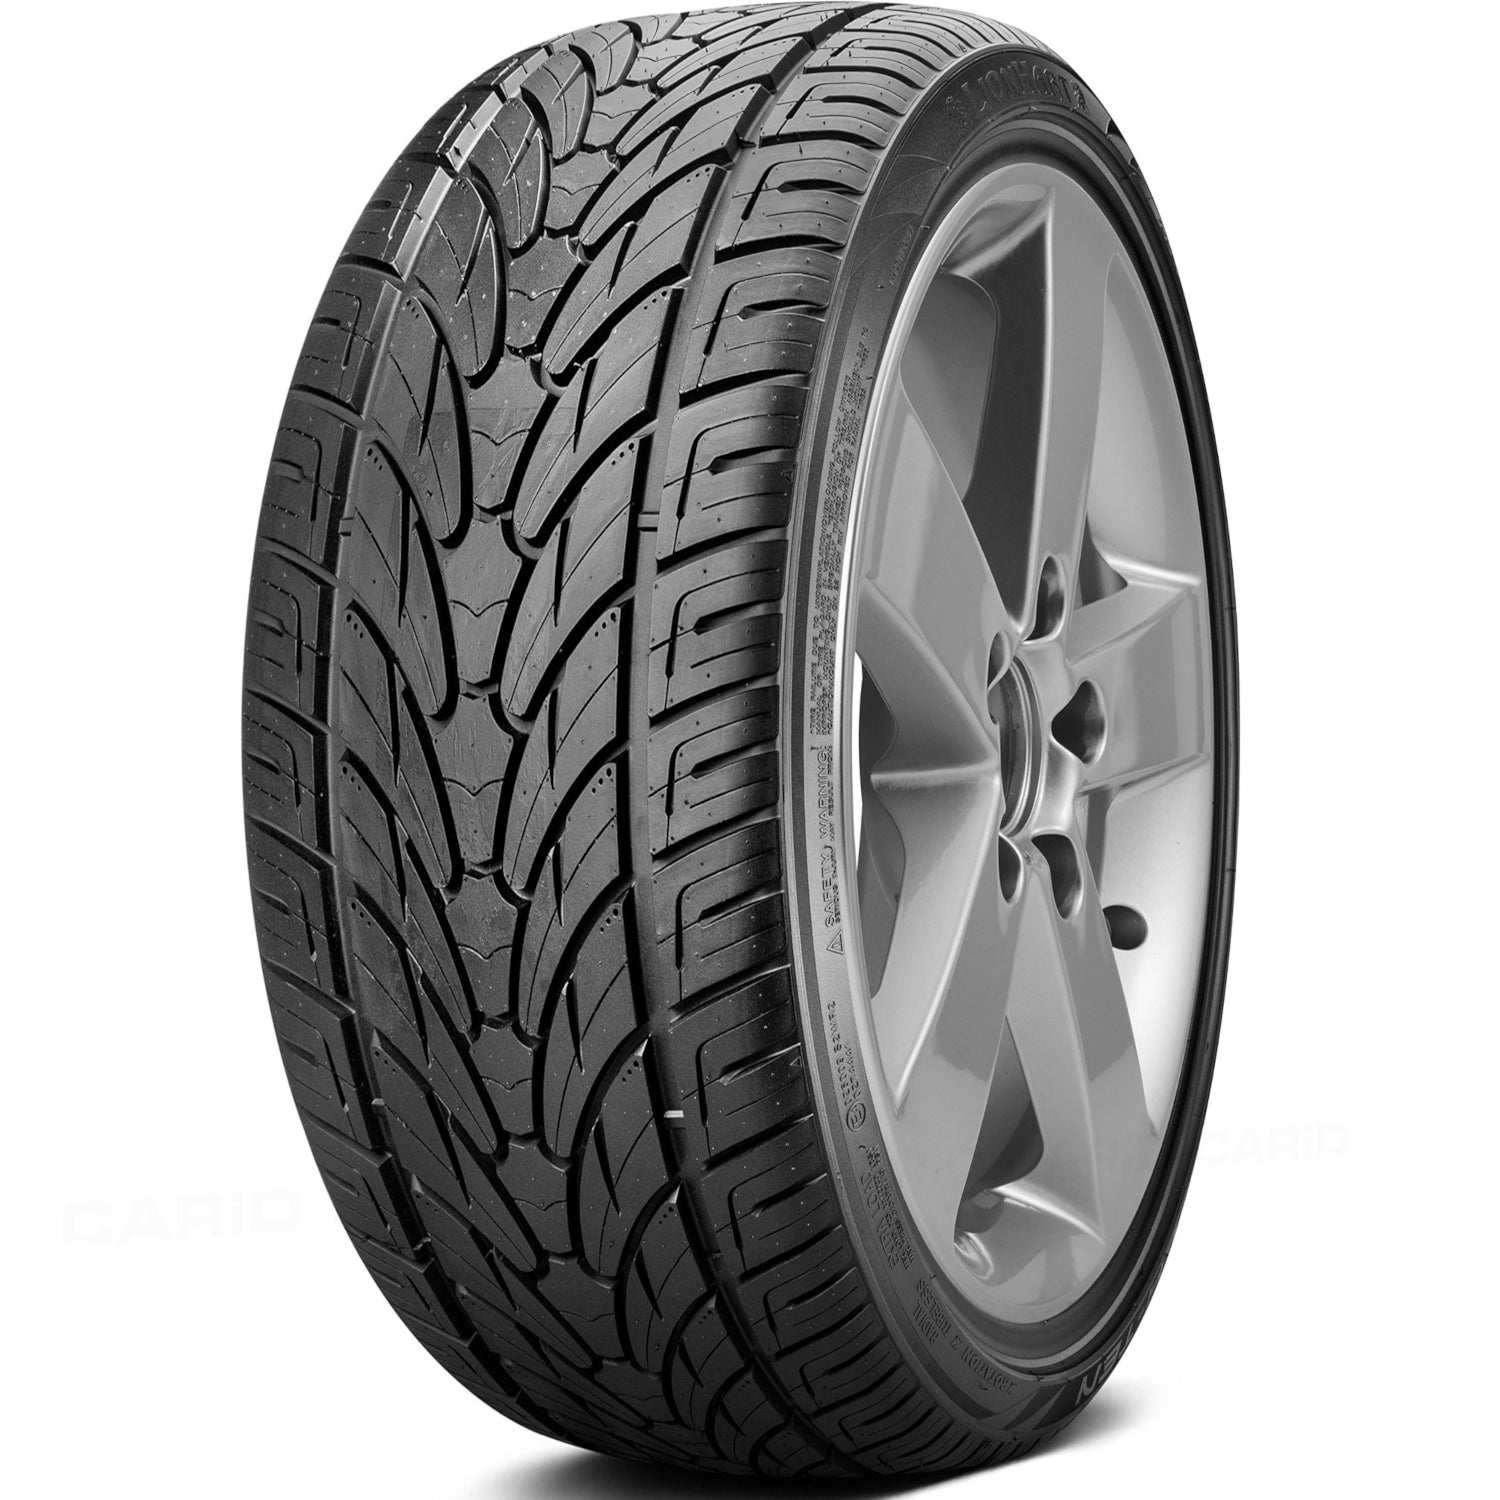 LIONHART LH-TEN 275/30ZR24 (30.6X10.8R 24) Tires